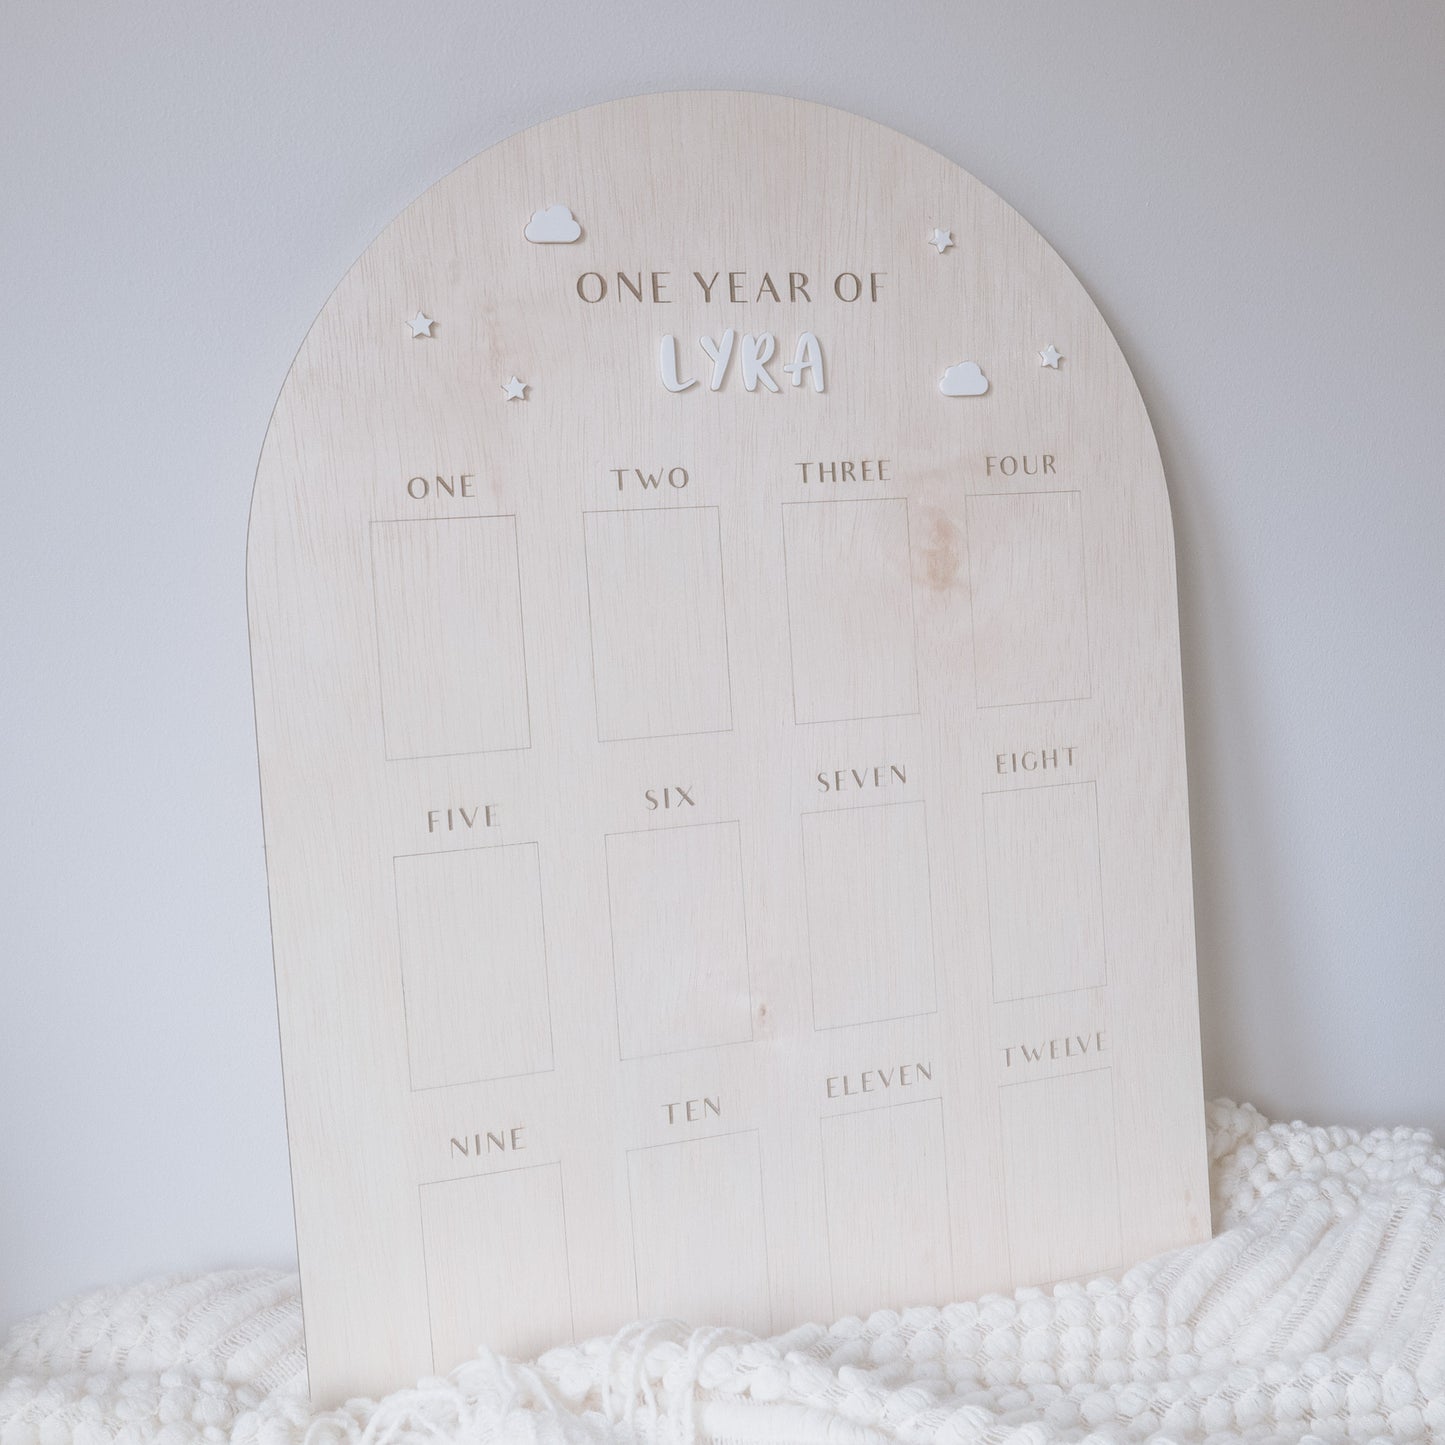 AZURE Personalised Baby One Year Milestone Photo Board